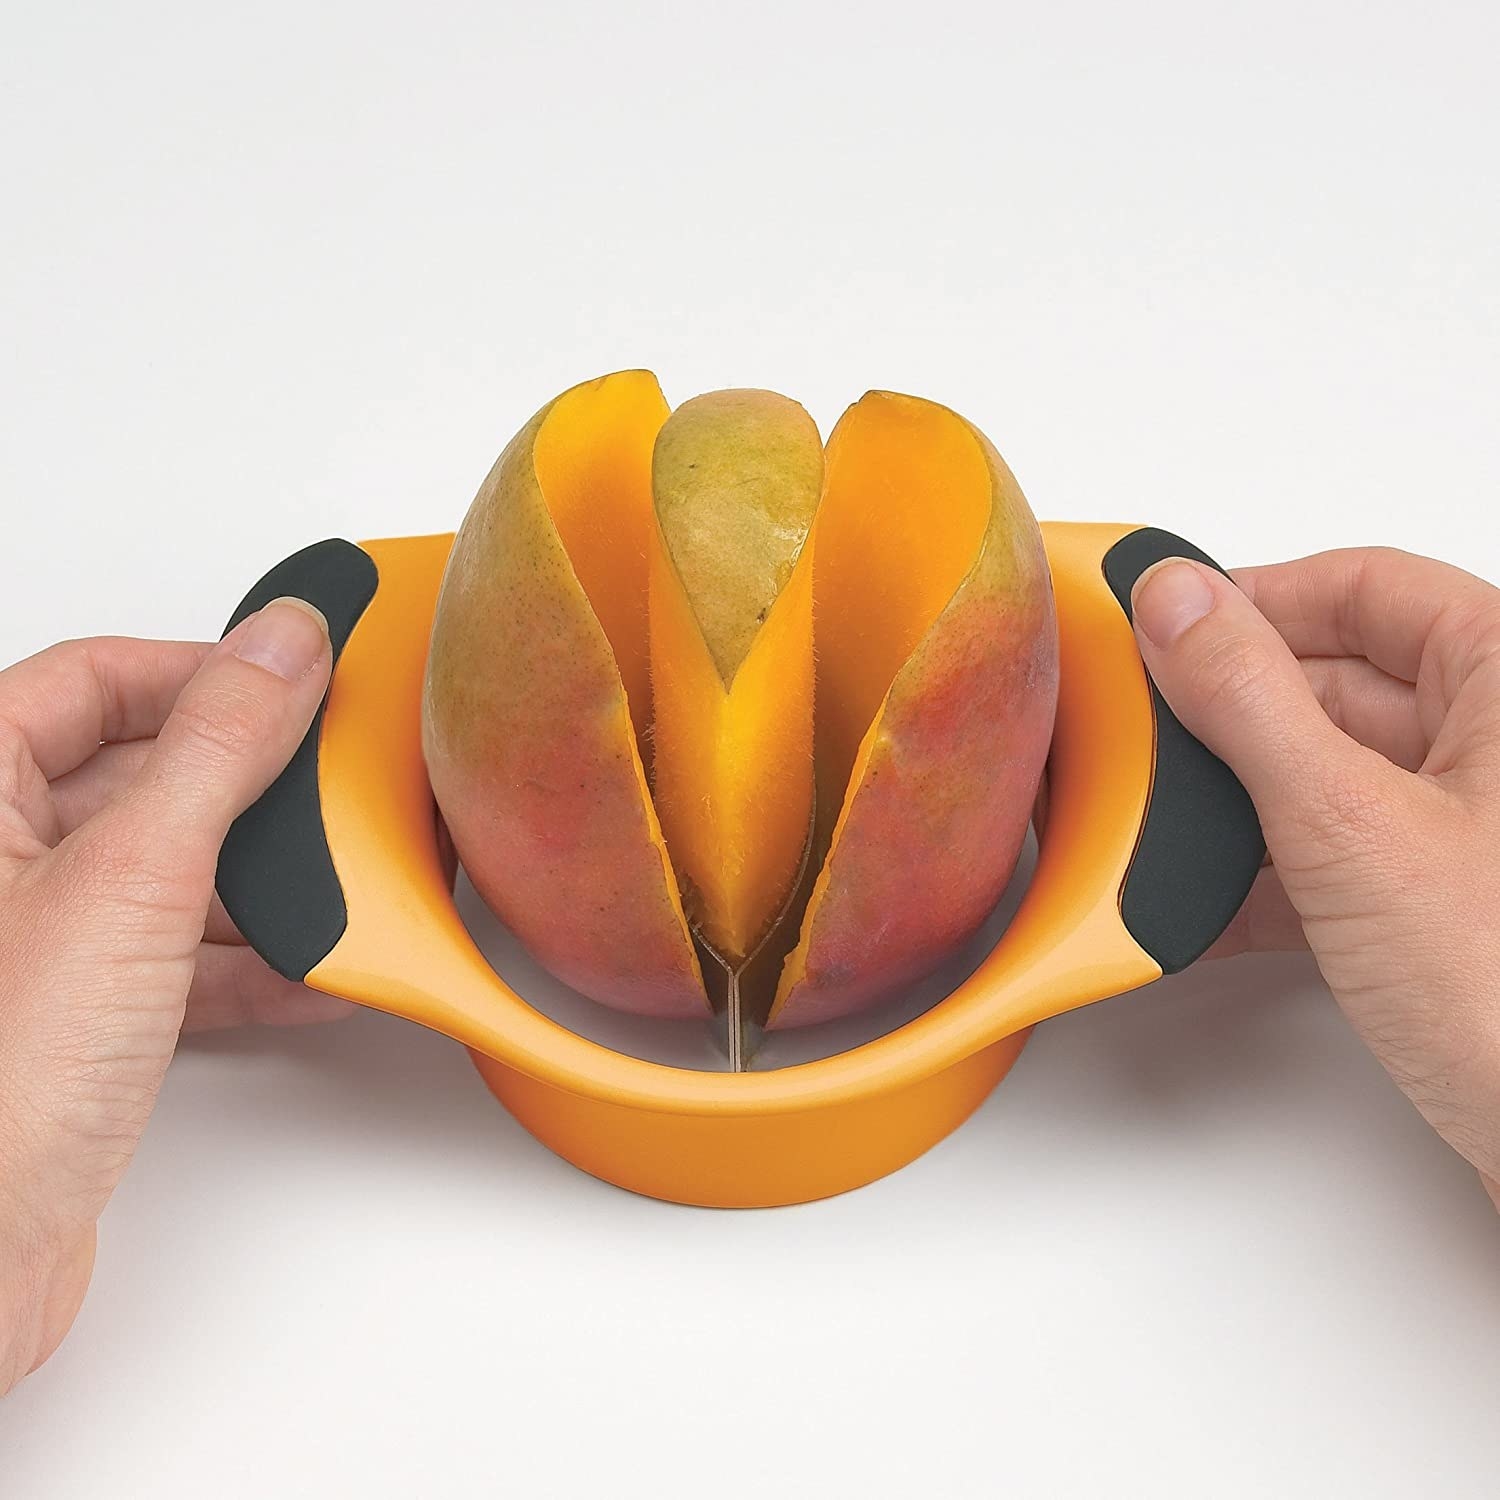 Someone using the mango slicer to pit a fresh mango